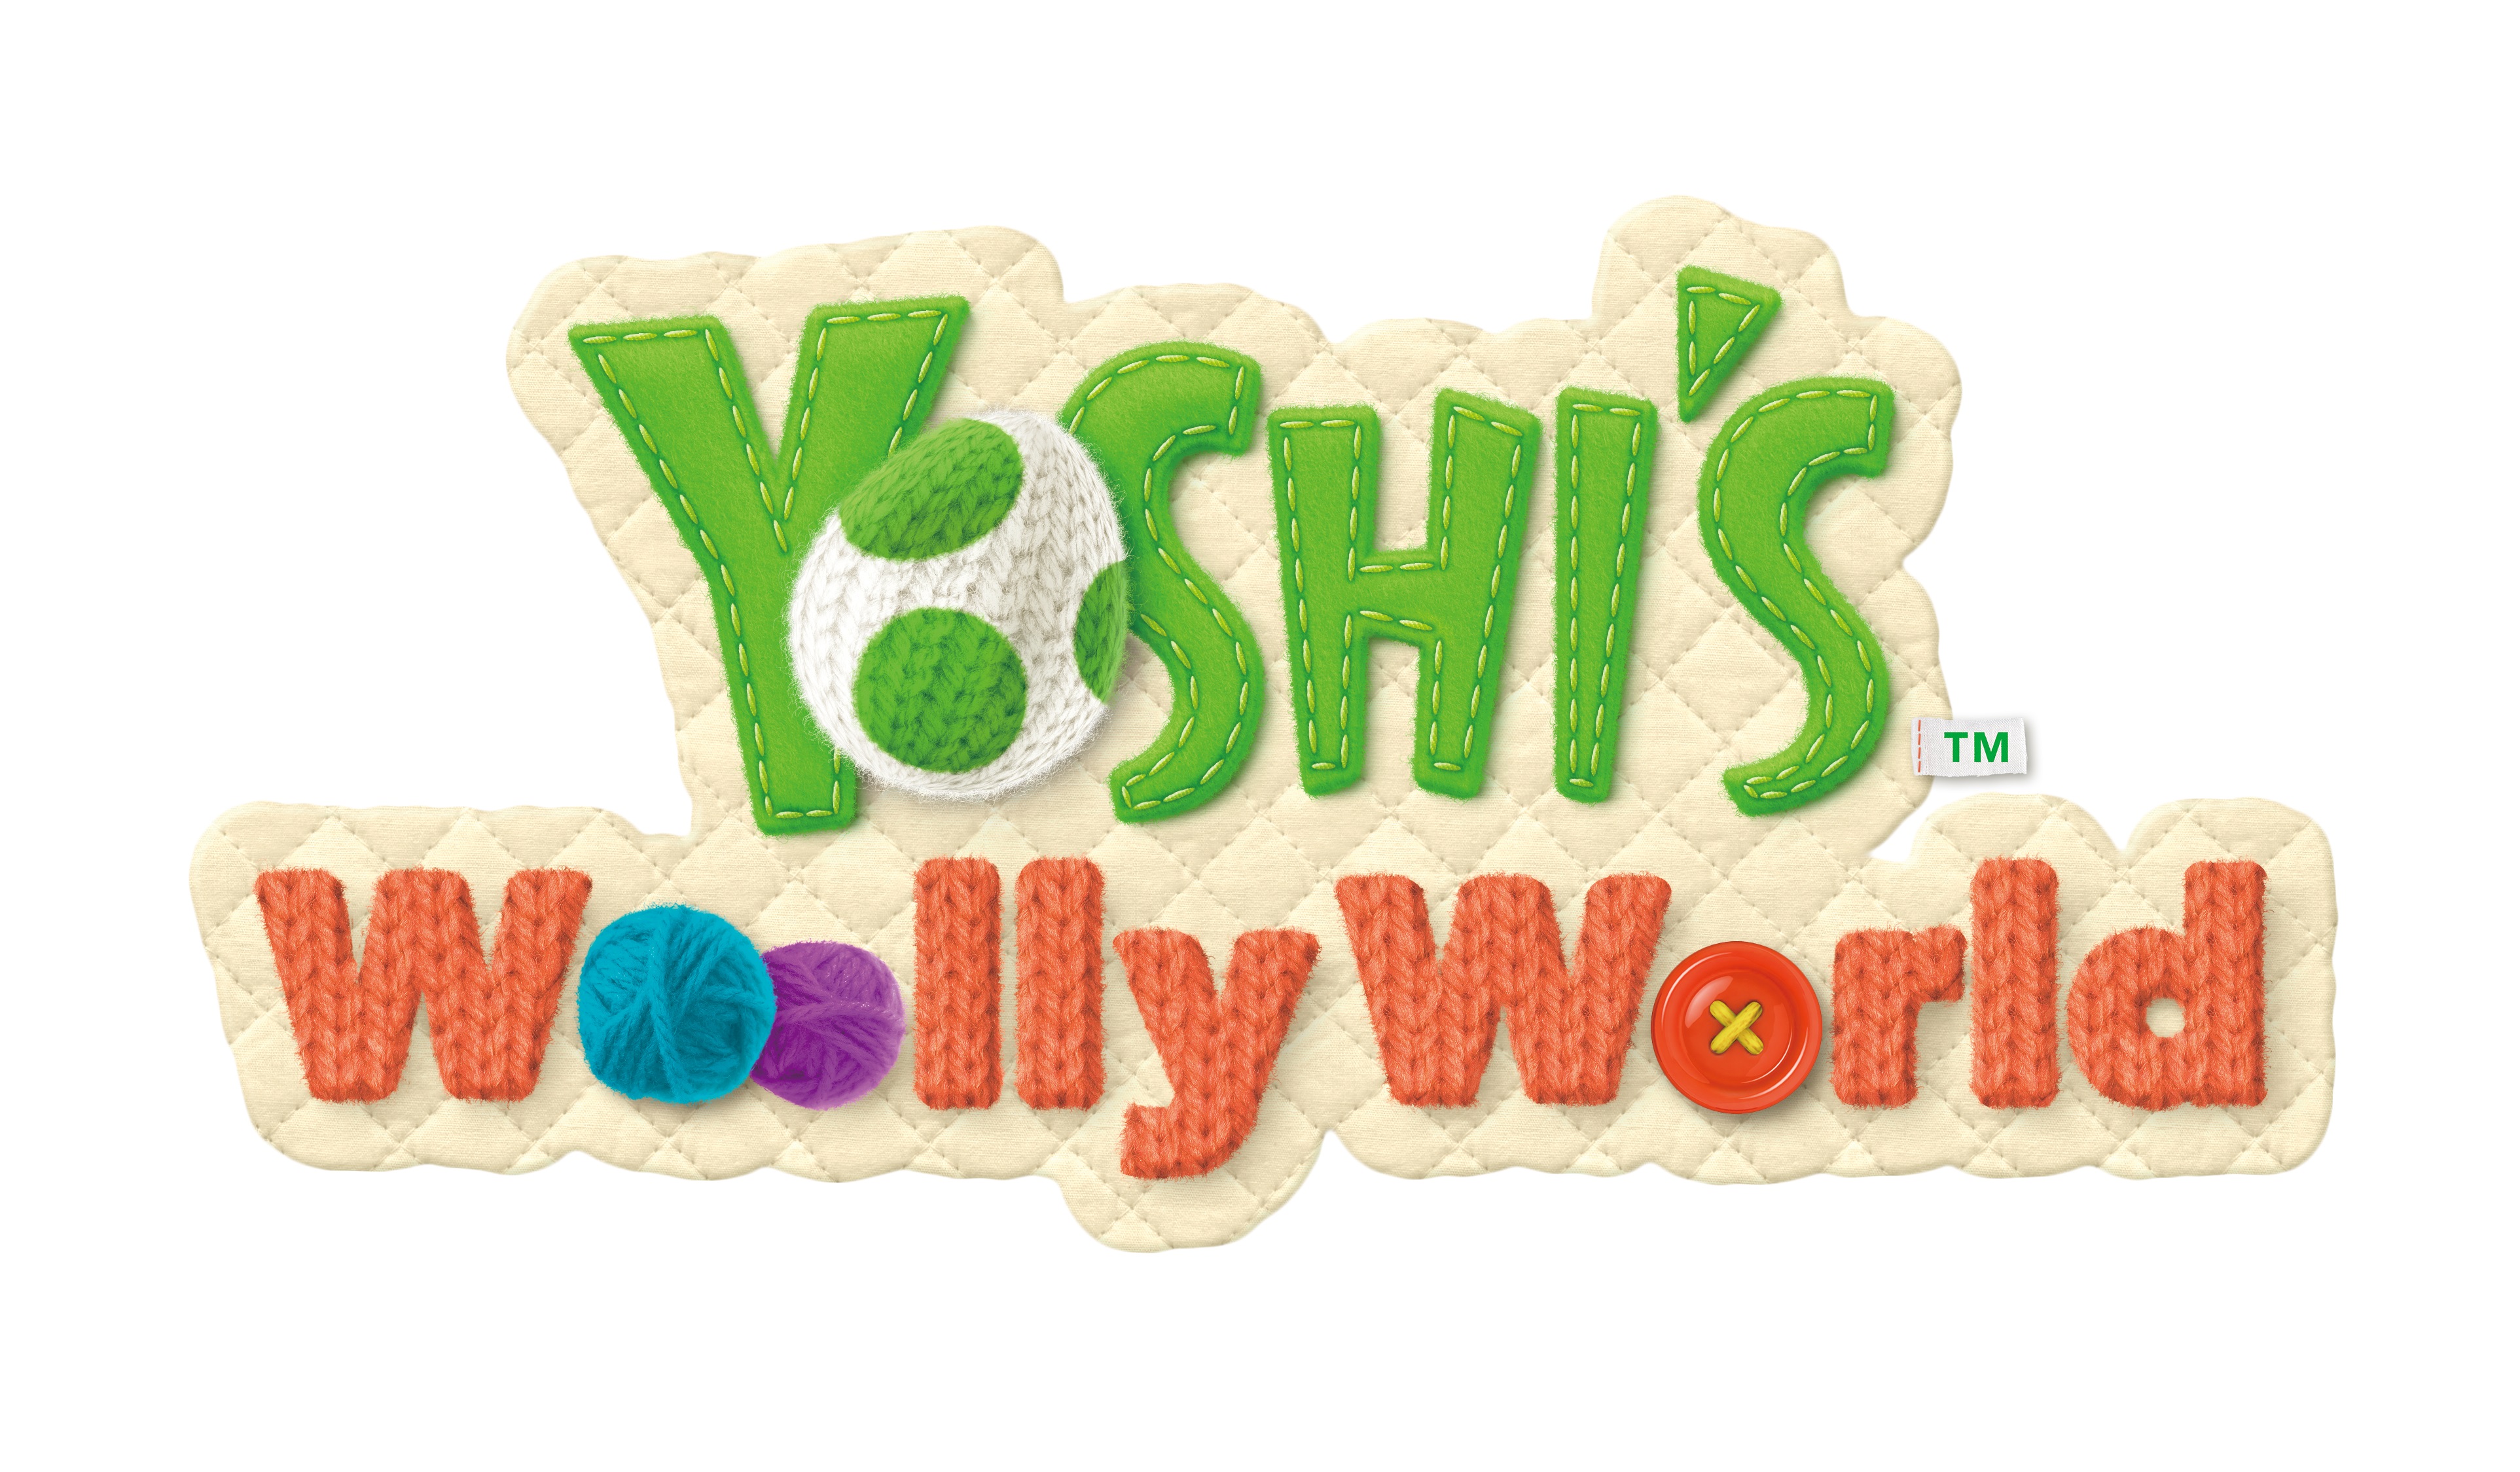 video game, yoshi's woolly world